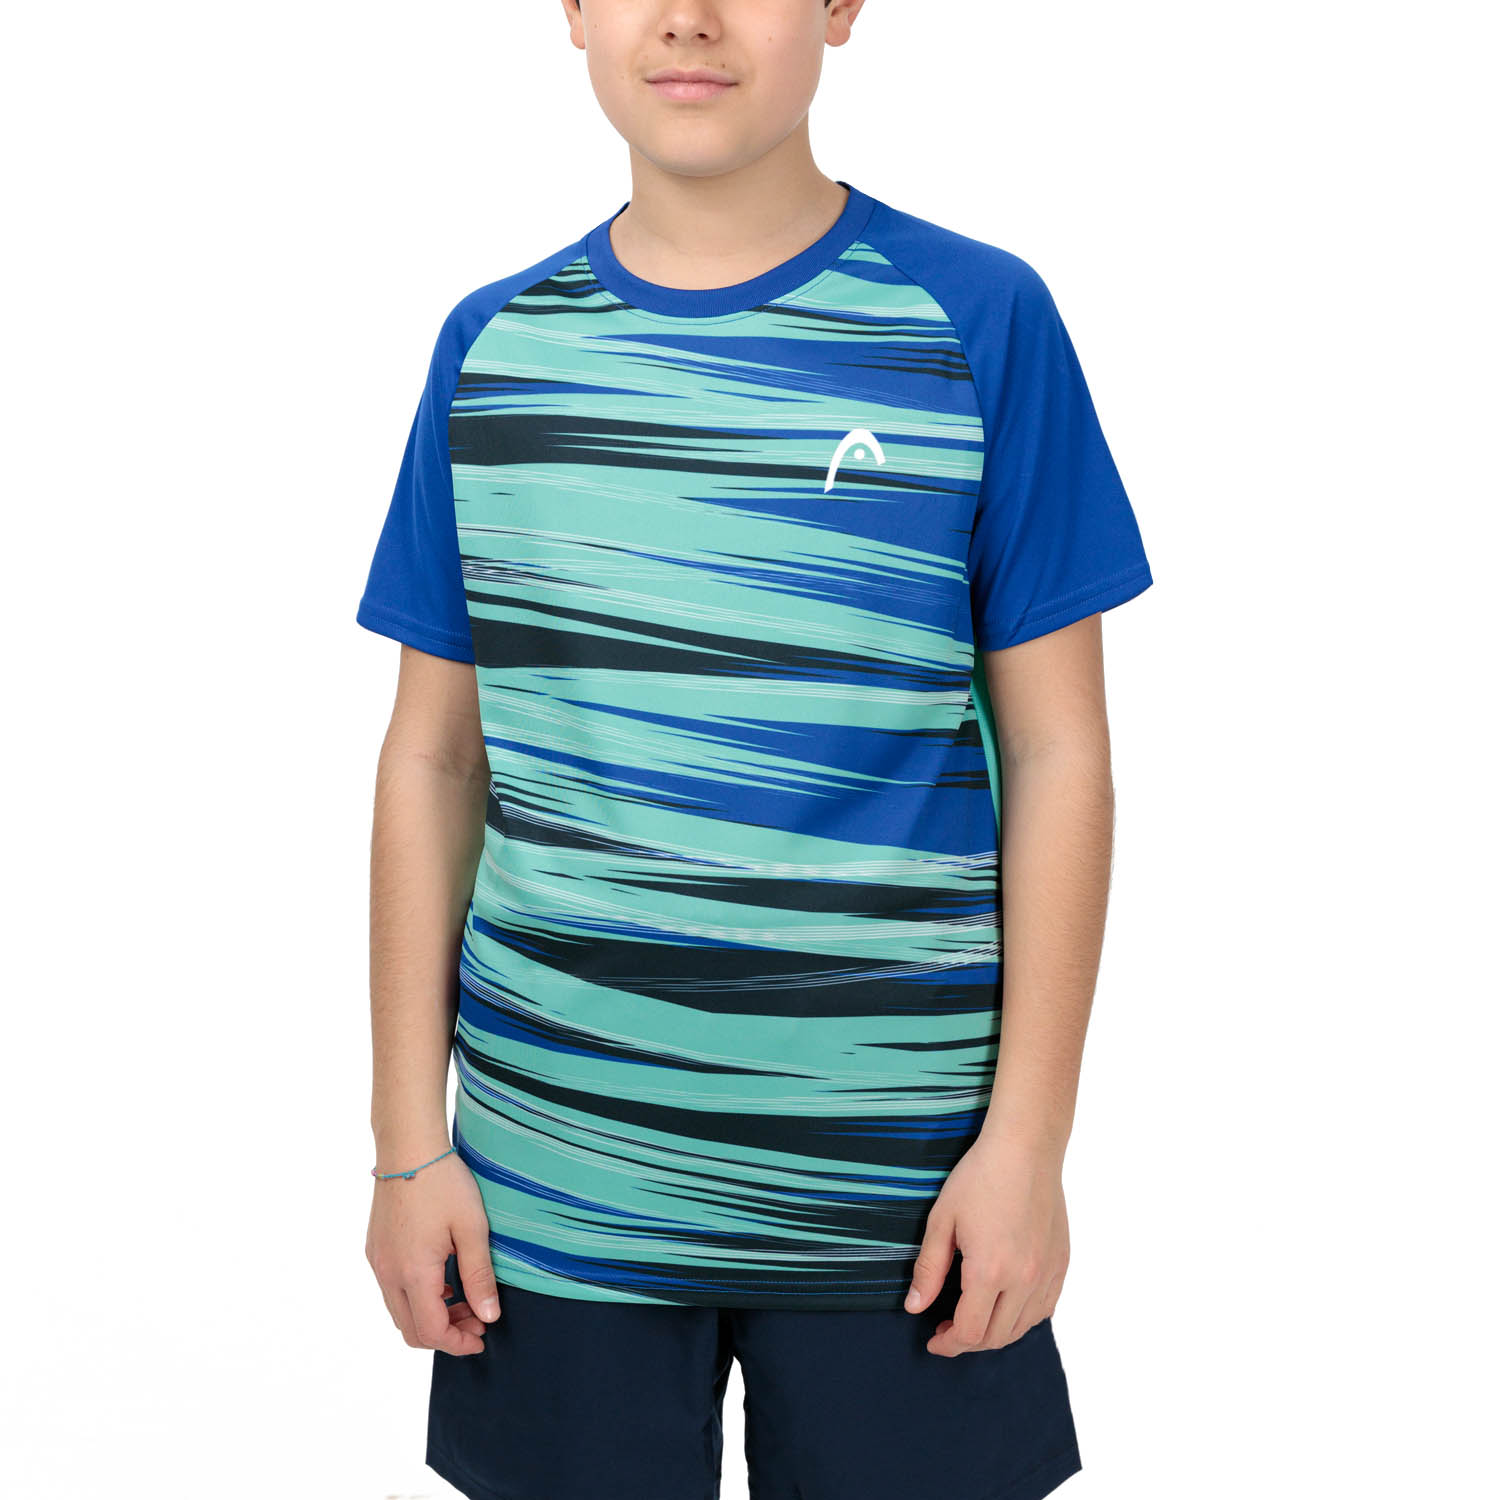 Head Topspin Camiseta Niño - Royal/Print Vision M